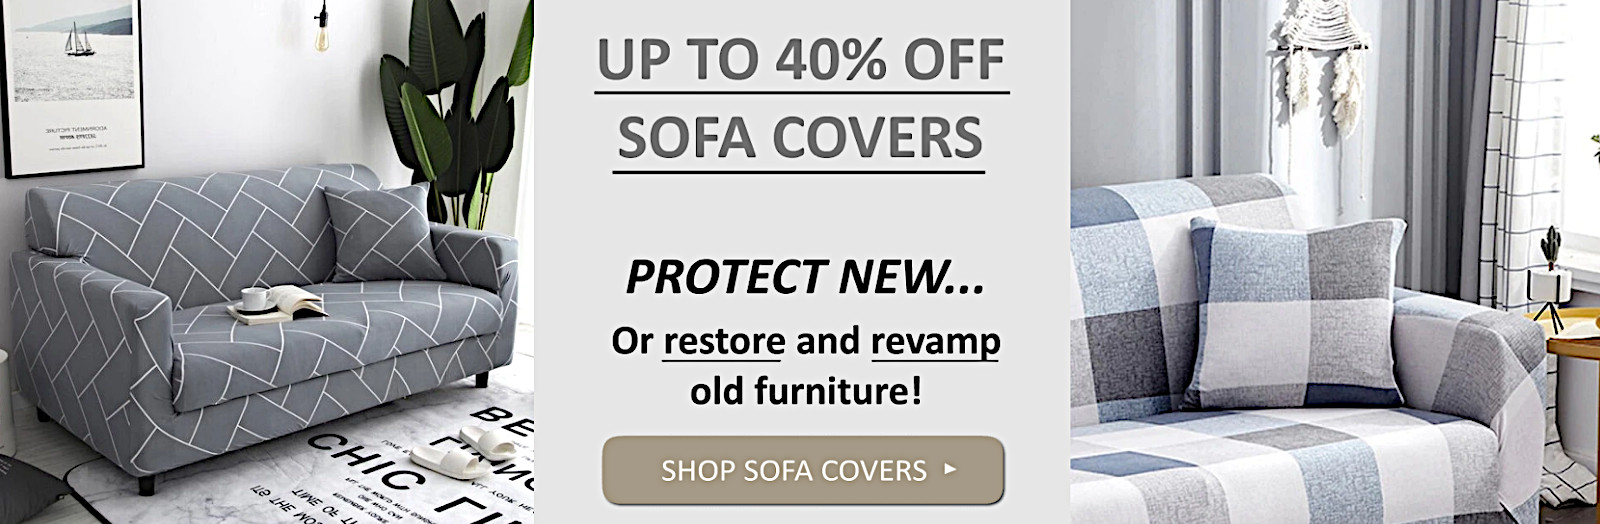 Cut-price sofa covers